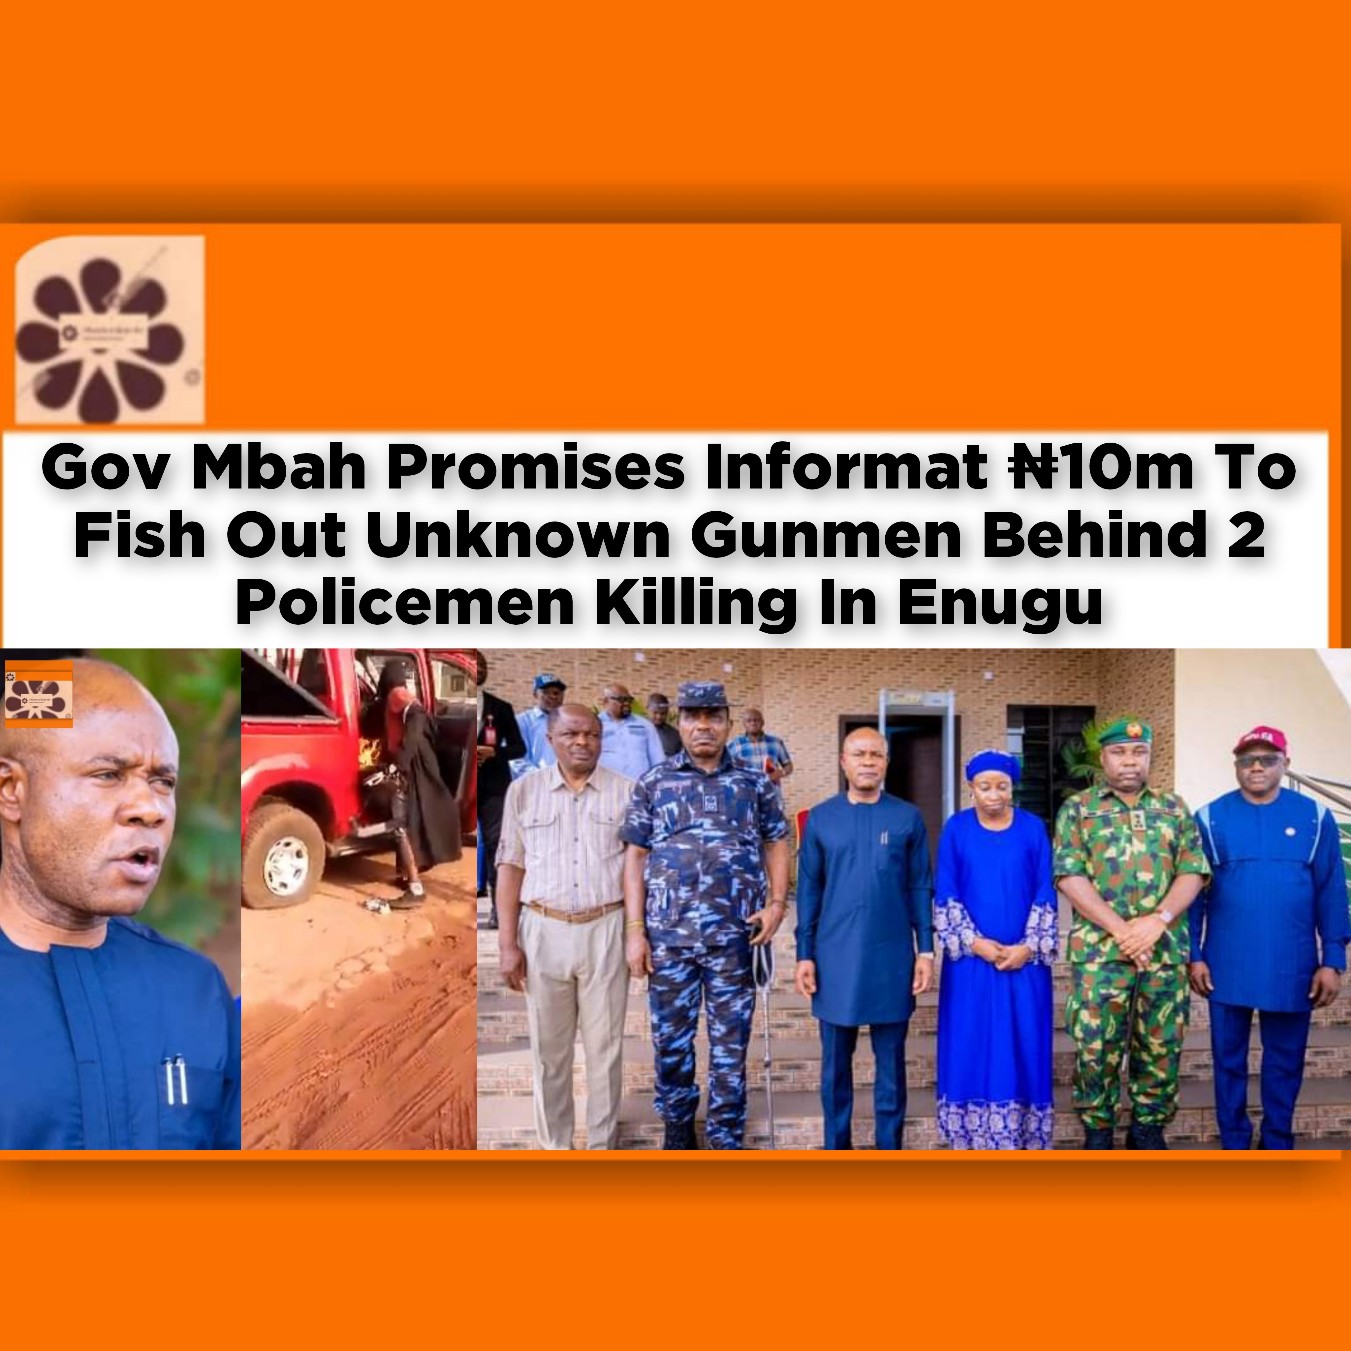 Gov Mbah Promises Informat ₦10m To Fish Out Unknown Gunmen Behind 2 Policemen Killing In Enugu ~ OsazuwaAkonedo #Biafra #Enugu #ESN #Gunmen #ipob #Mbah #Peter #Police #Unknown